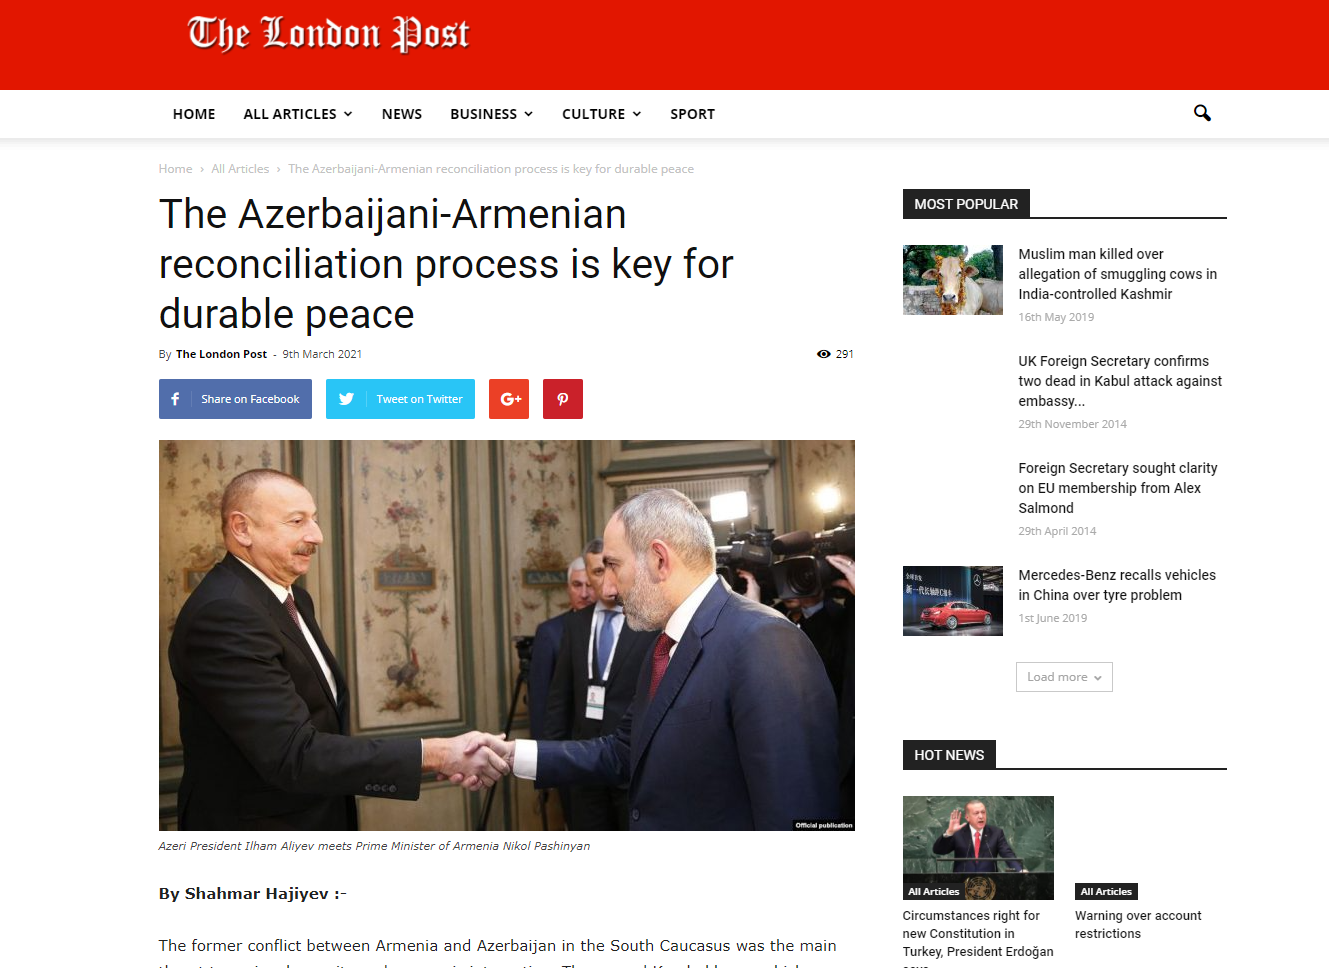 The Azerbaijani-Armenian reconciliation process is key for durable peace